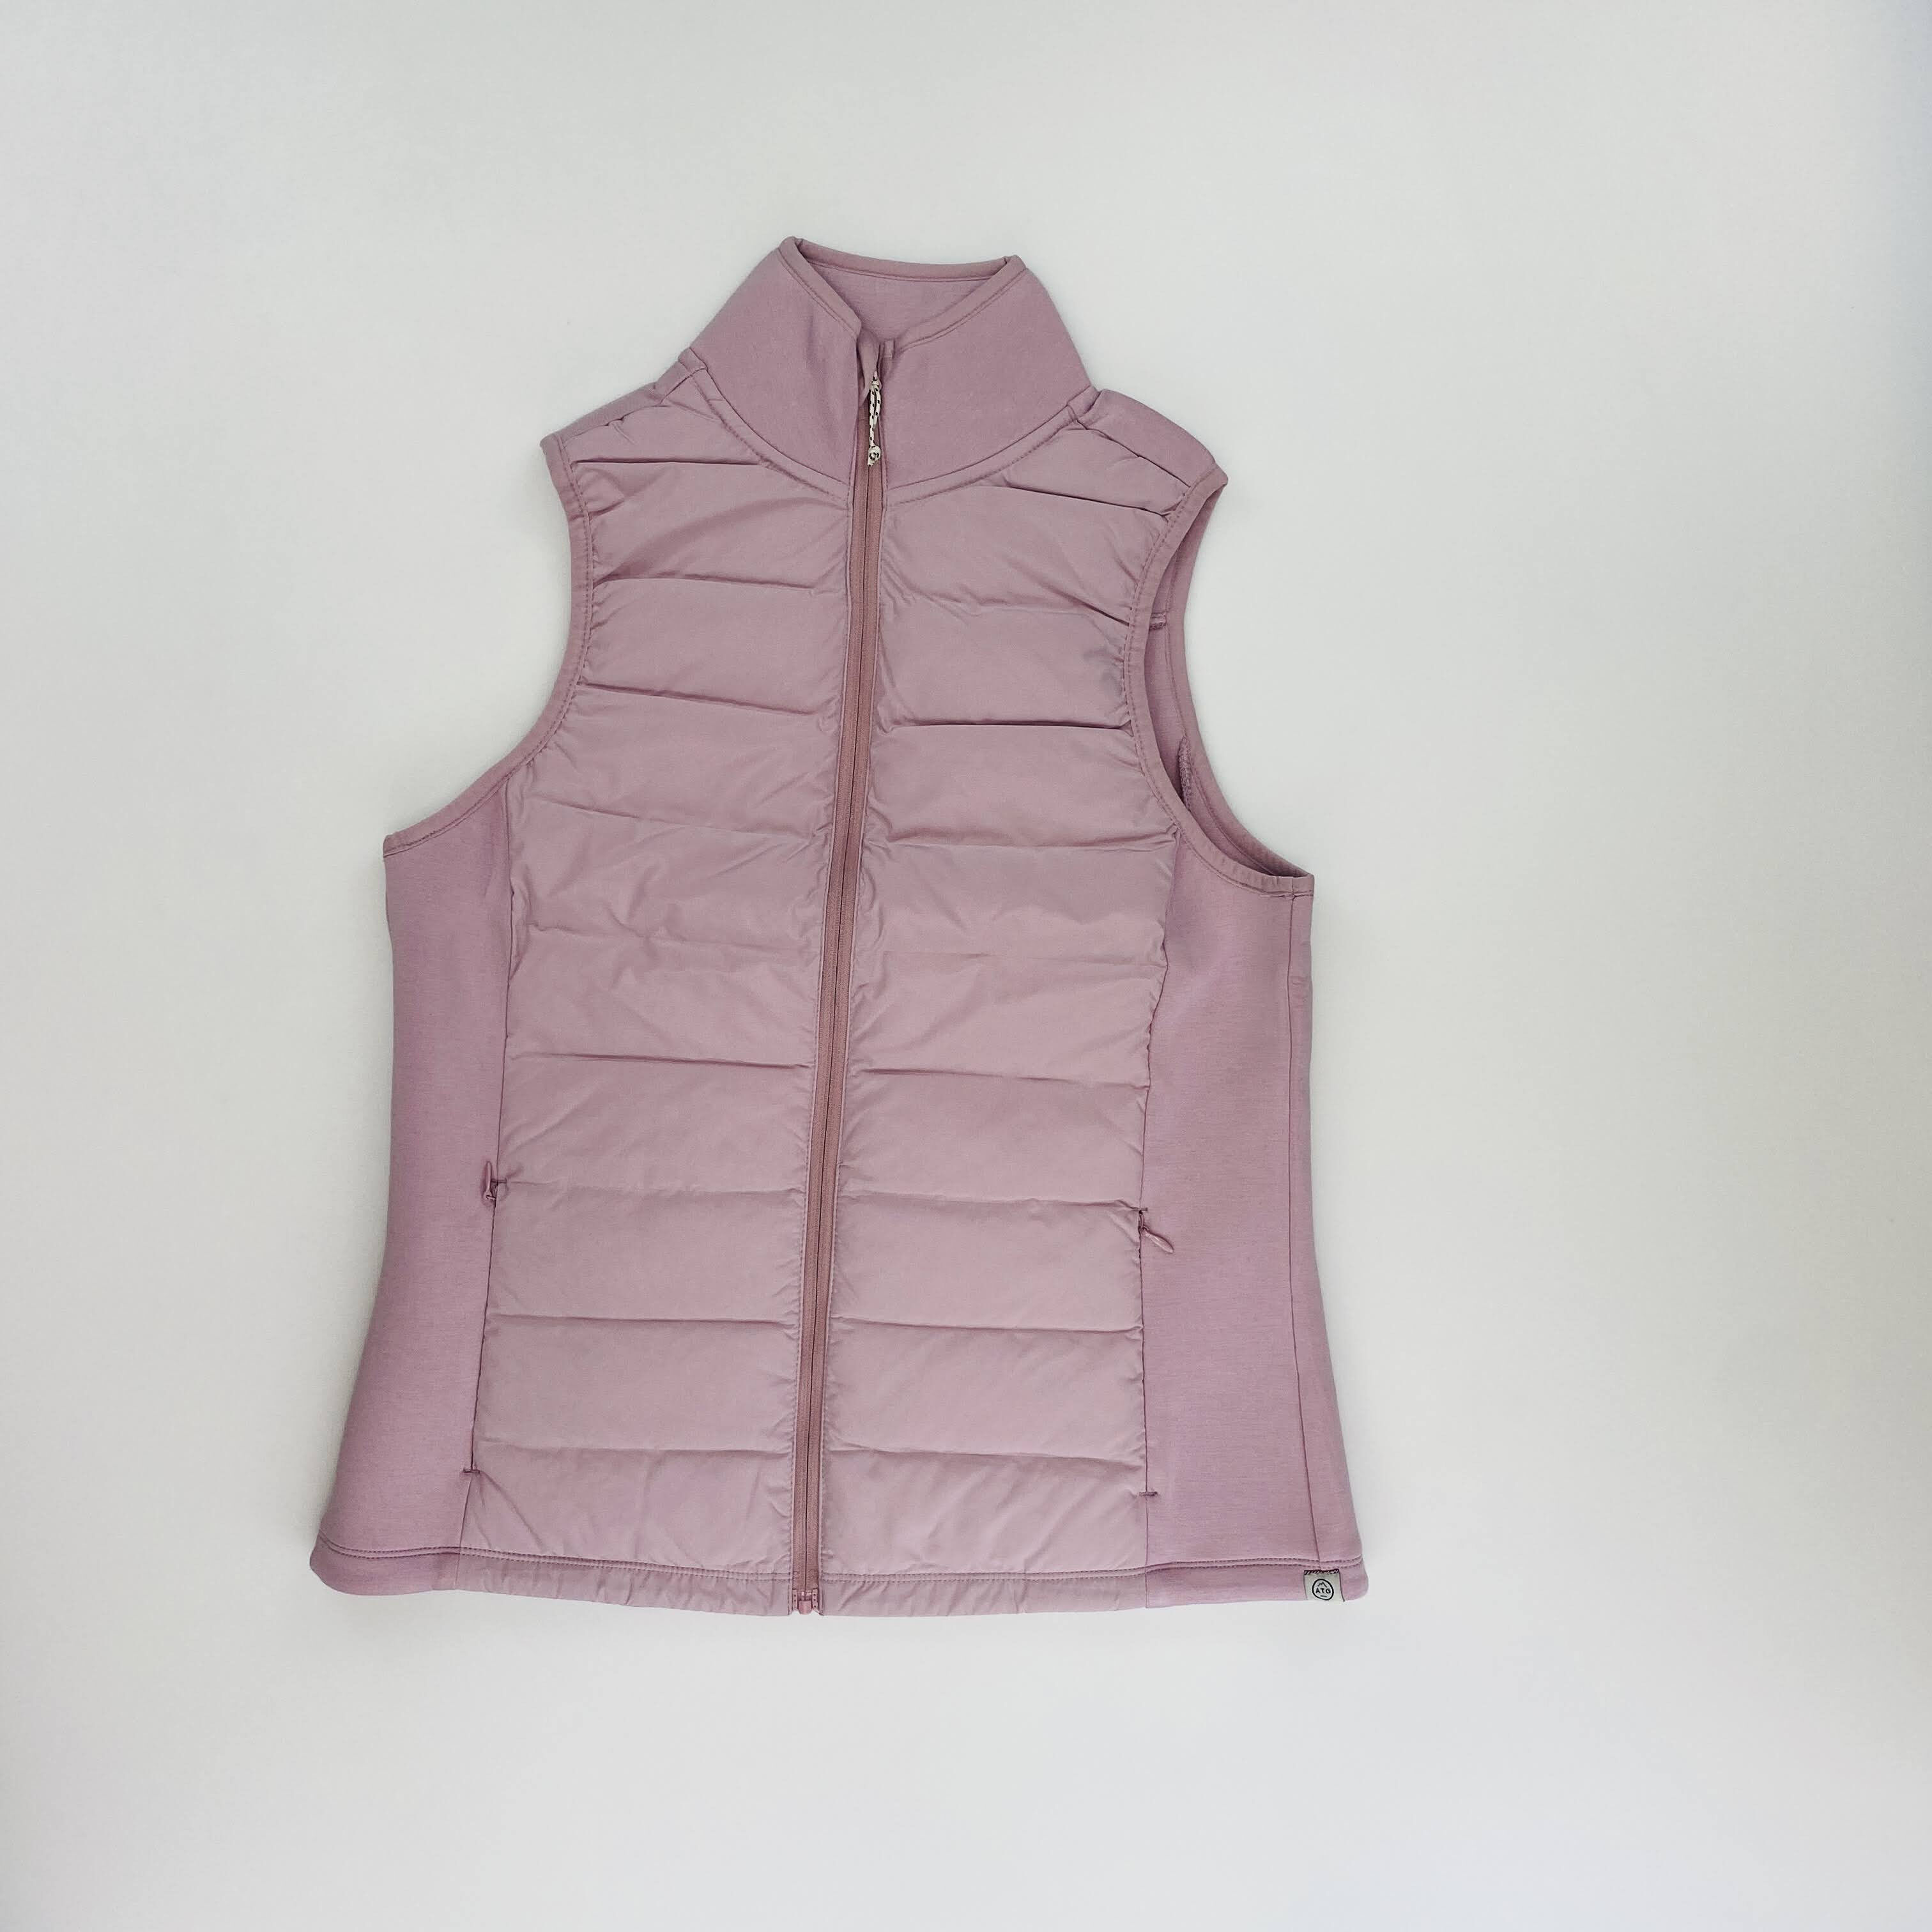 Wrangler Athletic Hybrid Vest - Second Hand Synthetic jacket - Women's - Pink - S | Hardloop